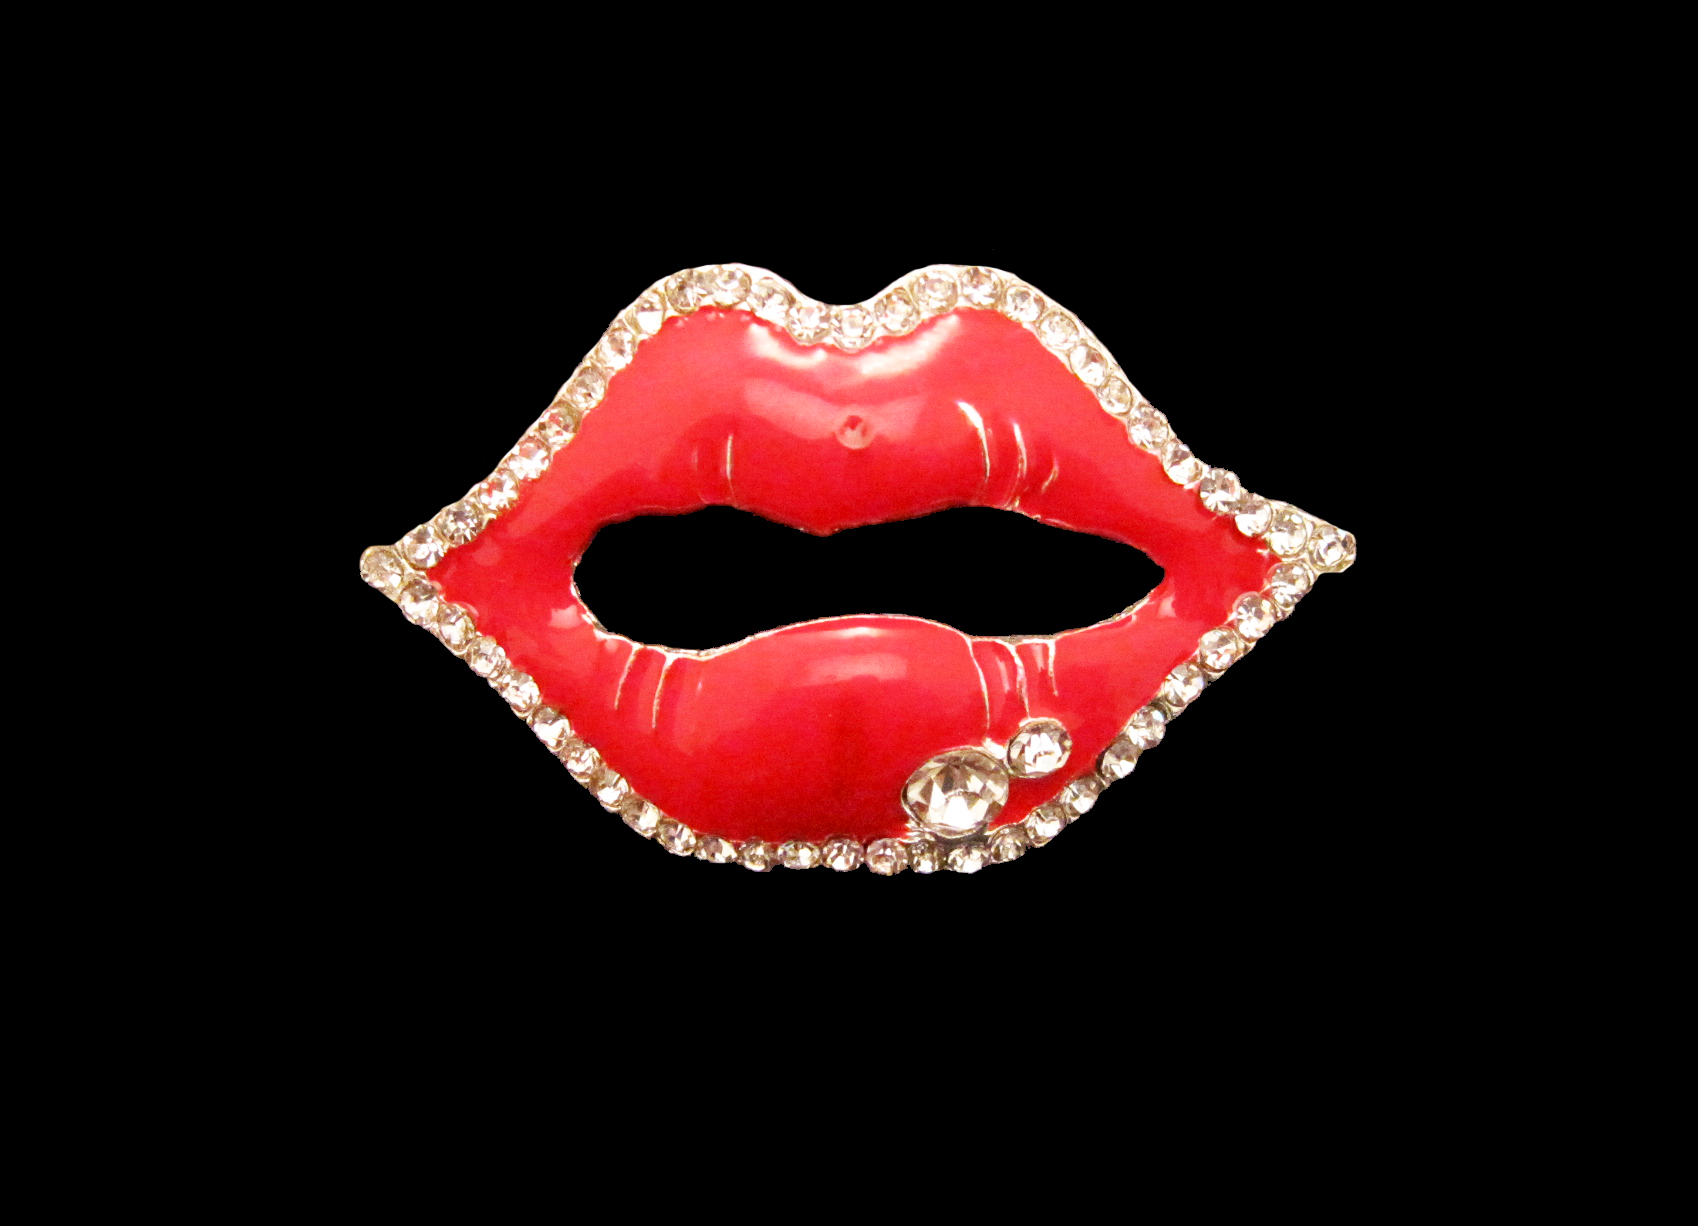 Red Lips Brooch With Rhinestones | Ulisse Fashion Art Details